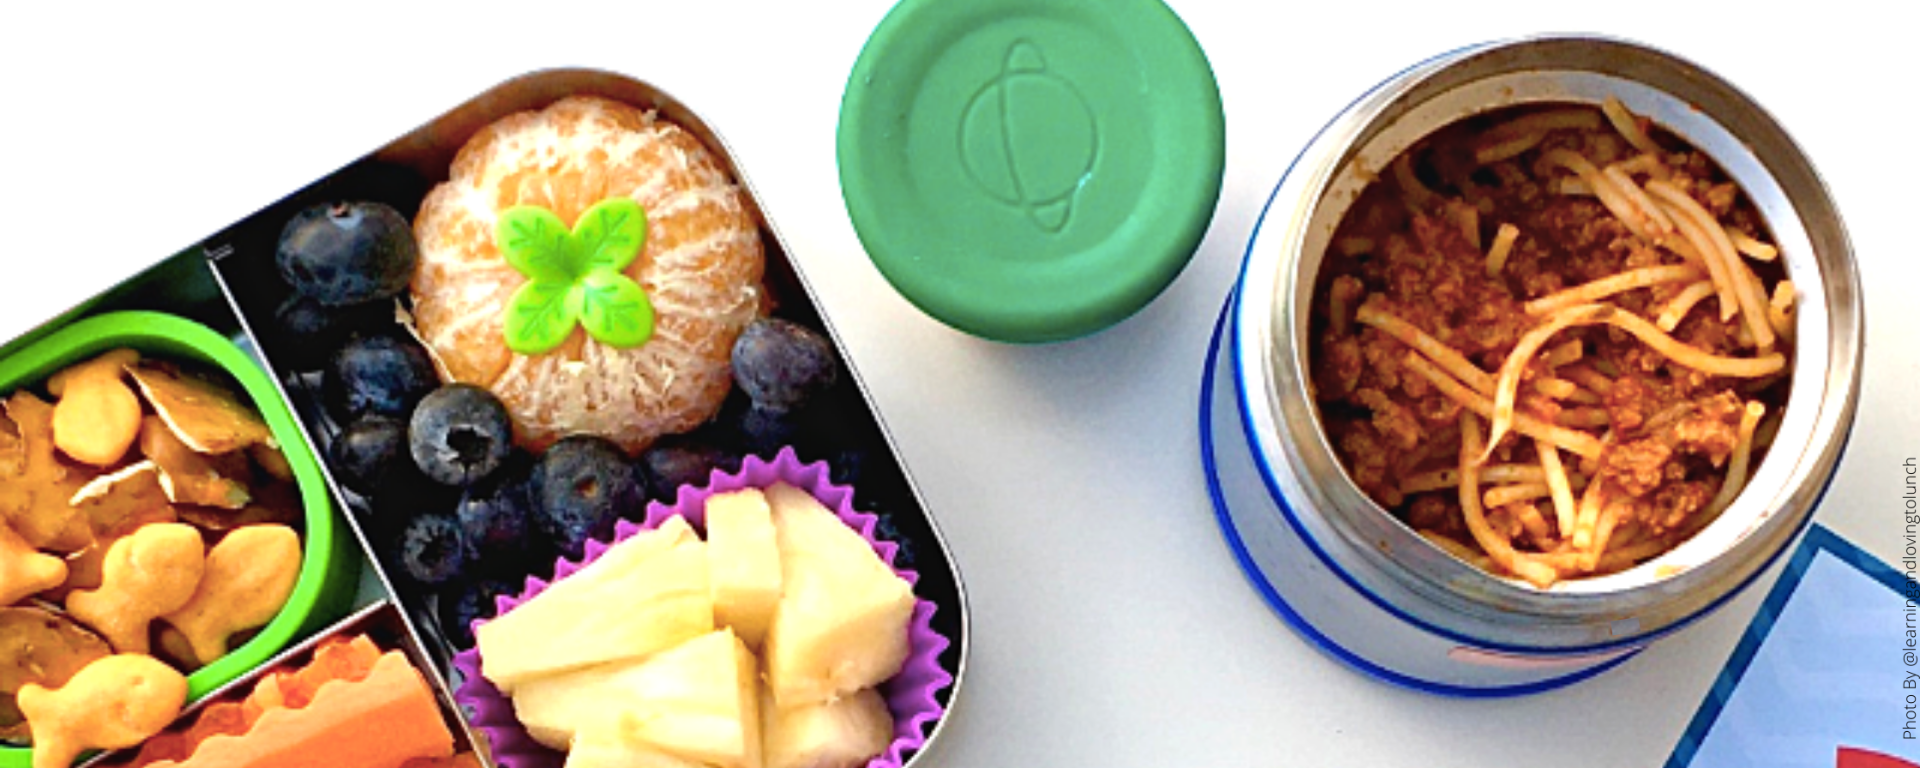 5 Easy Hot Lunch Ideas For School – Teuko Blog